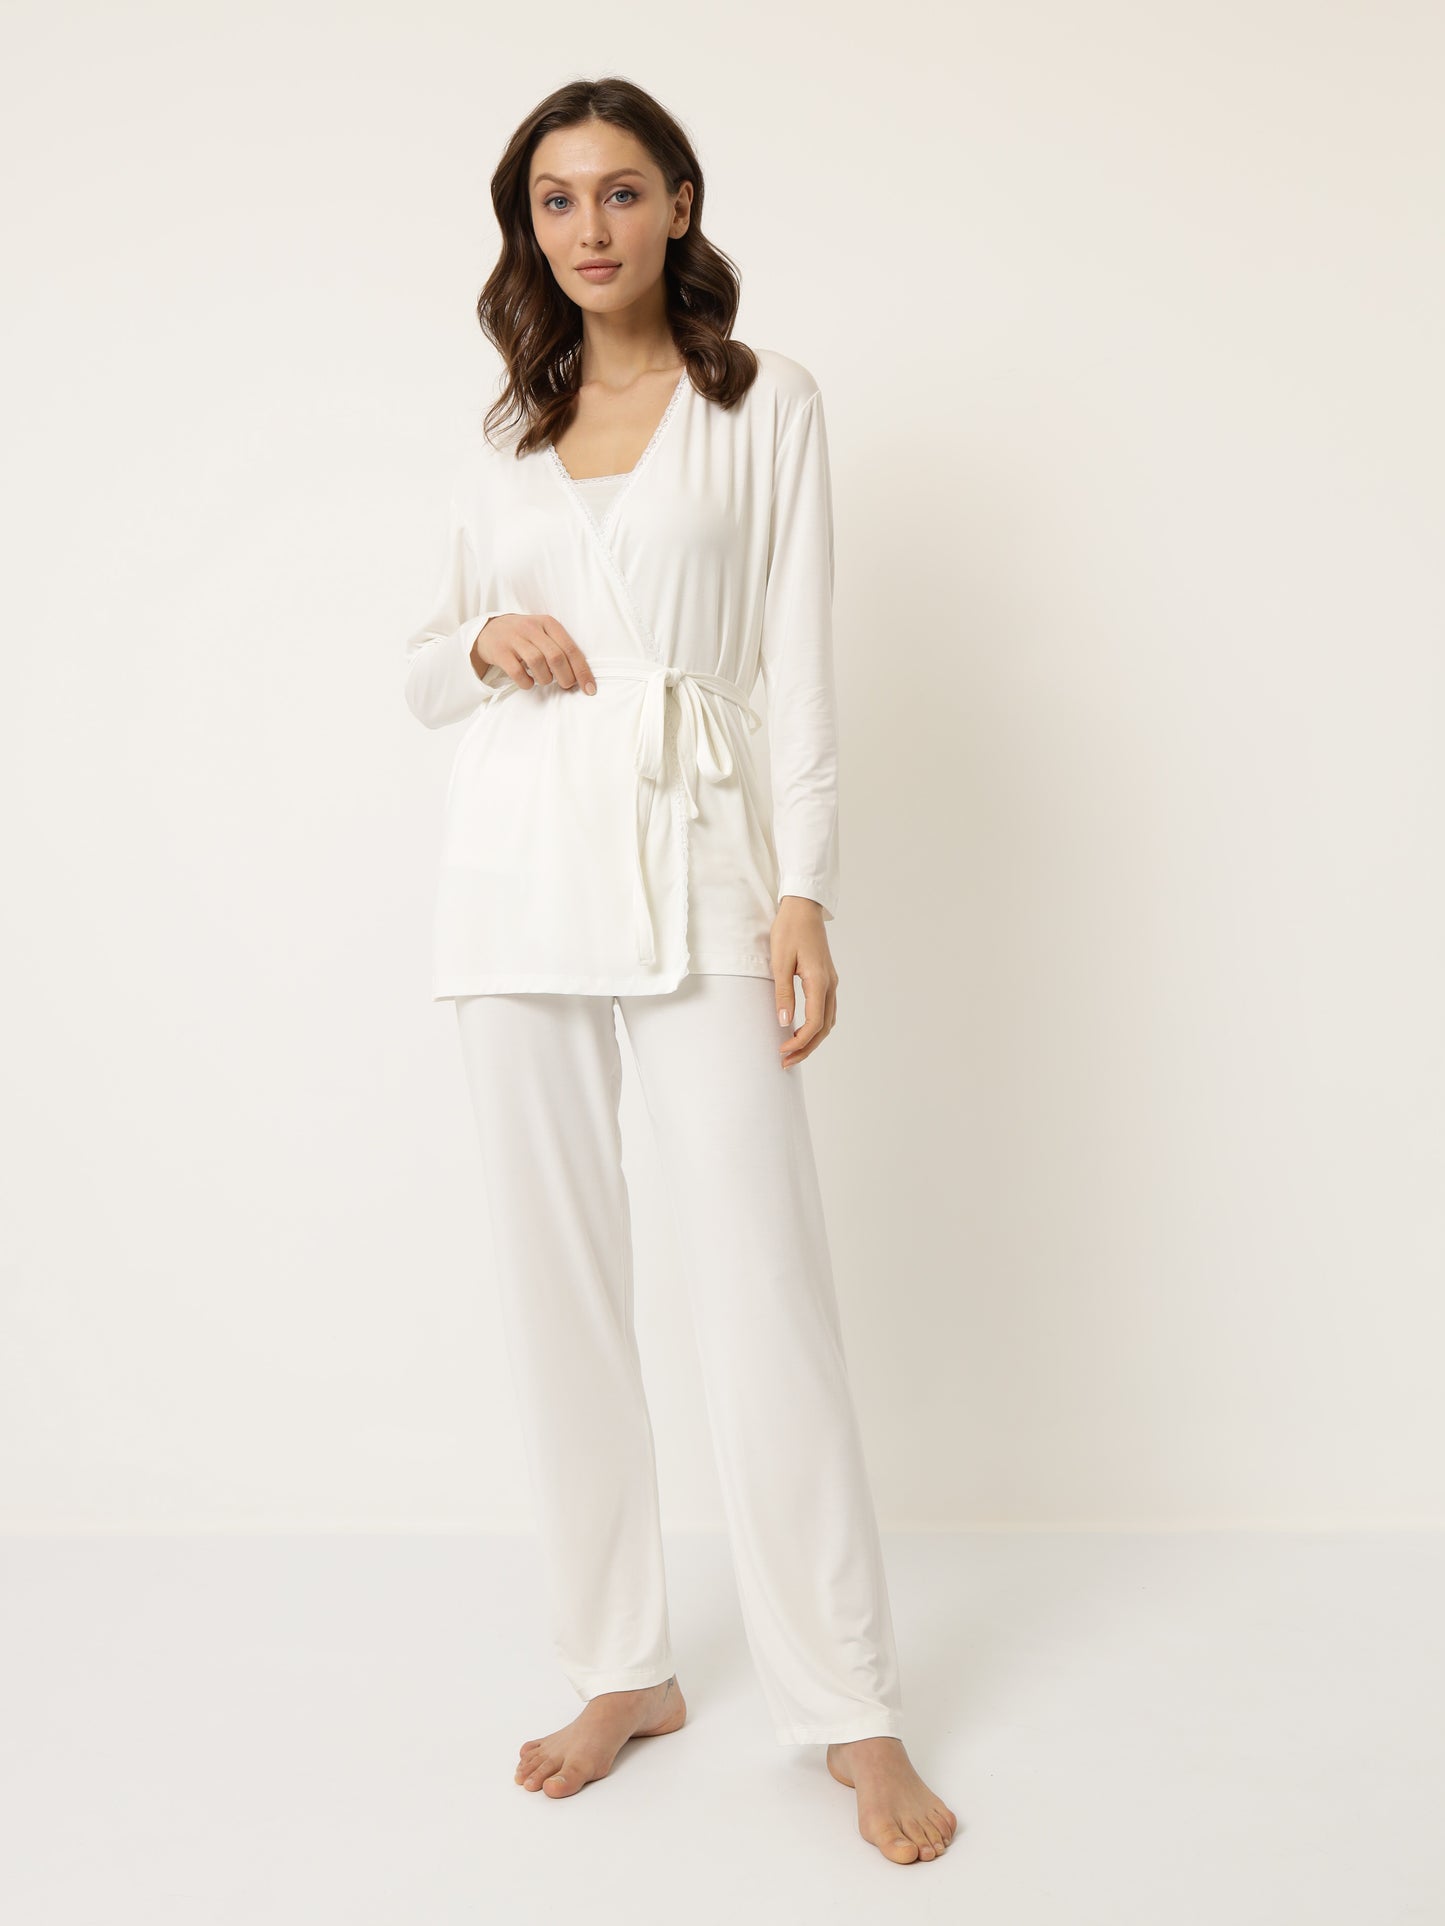 Damen Pyjama Set mit Morgenmantel aus Bambus viskose LMS-6176 Cream Creme